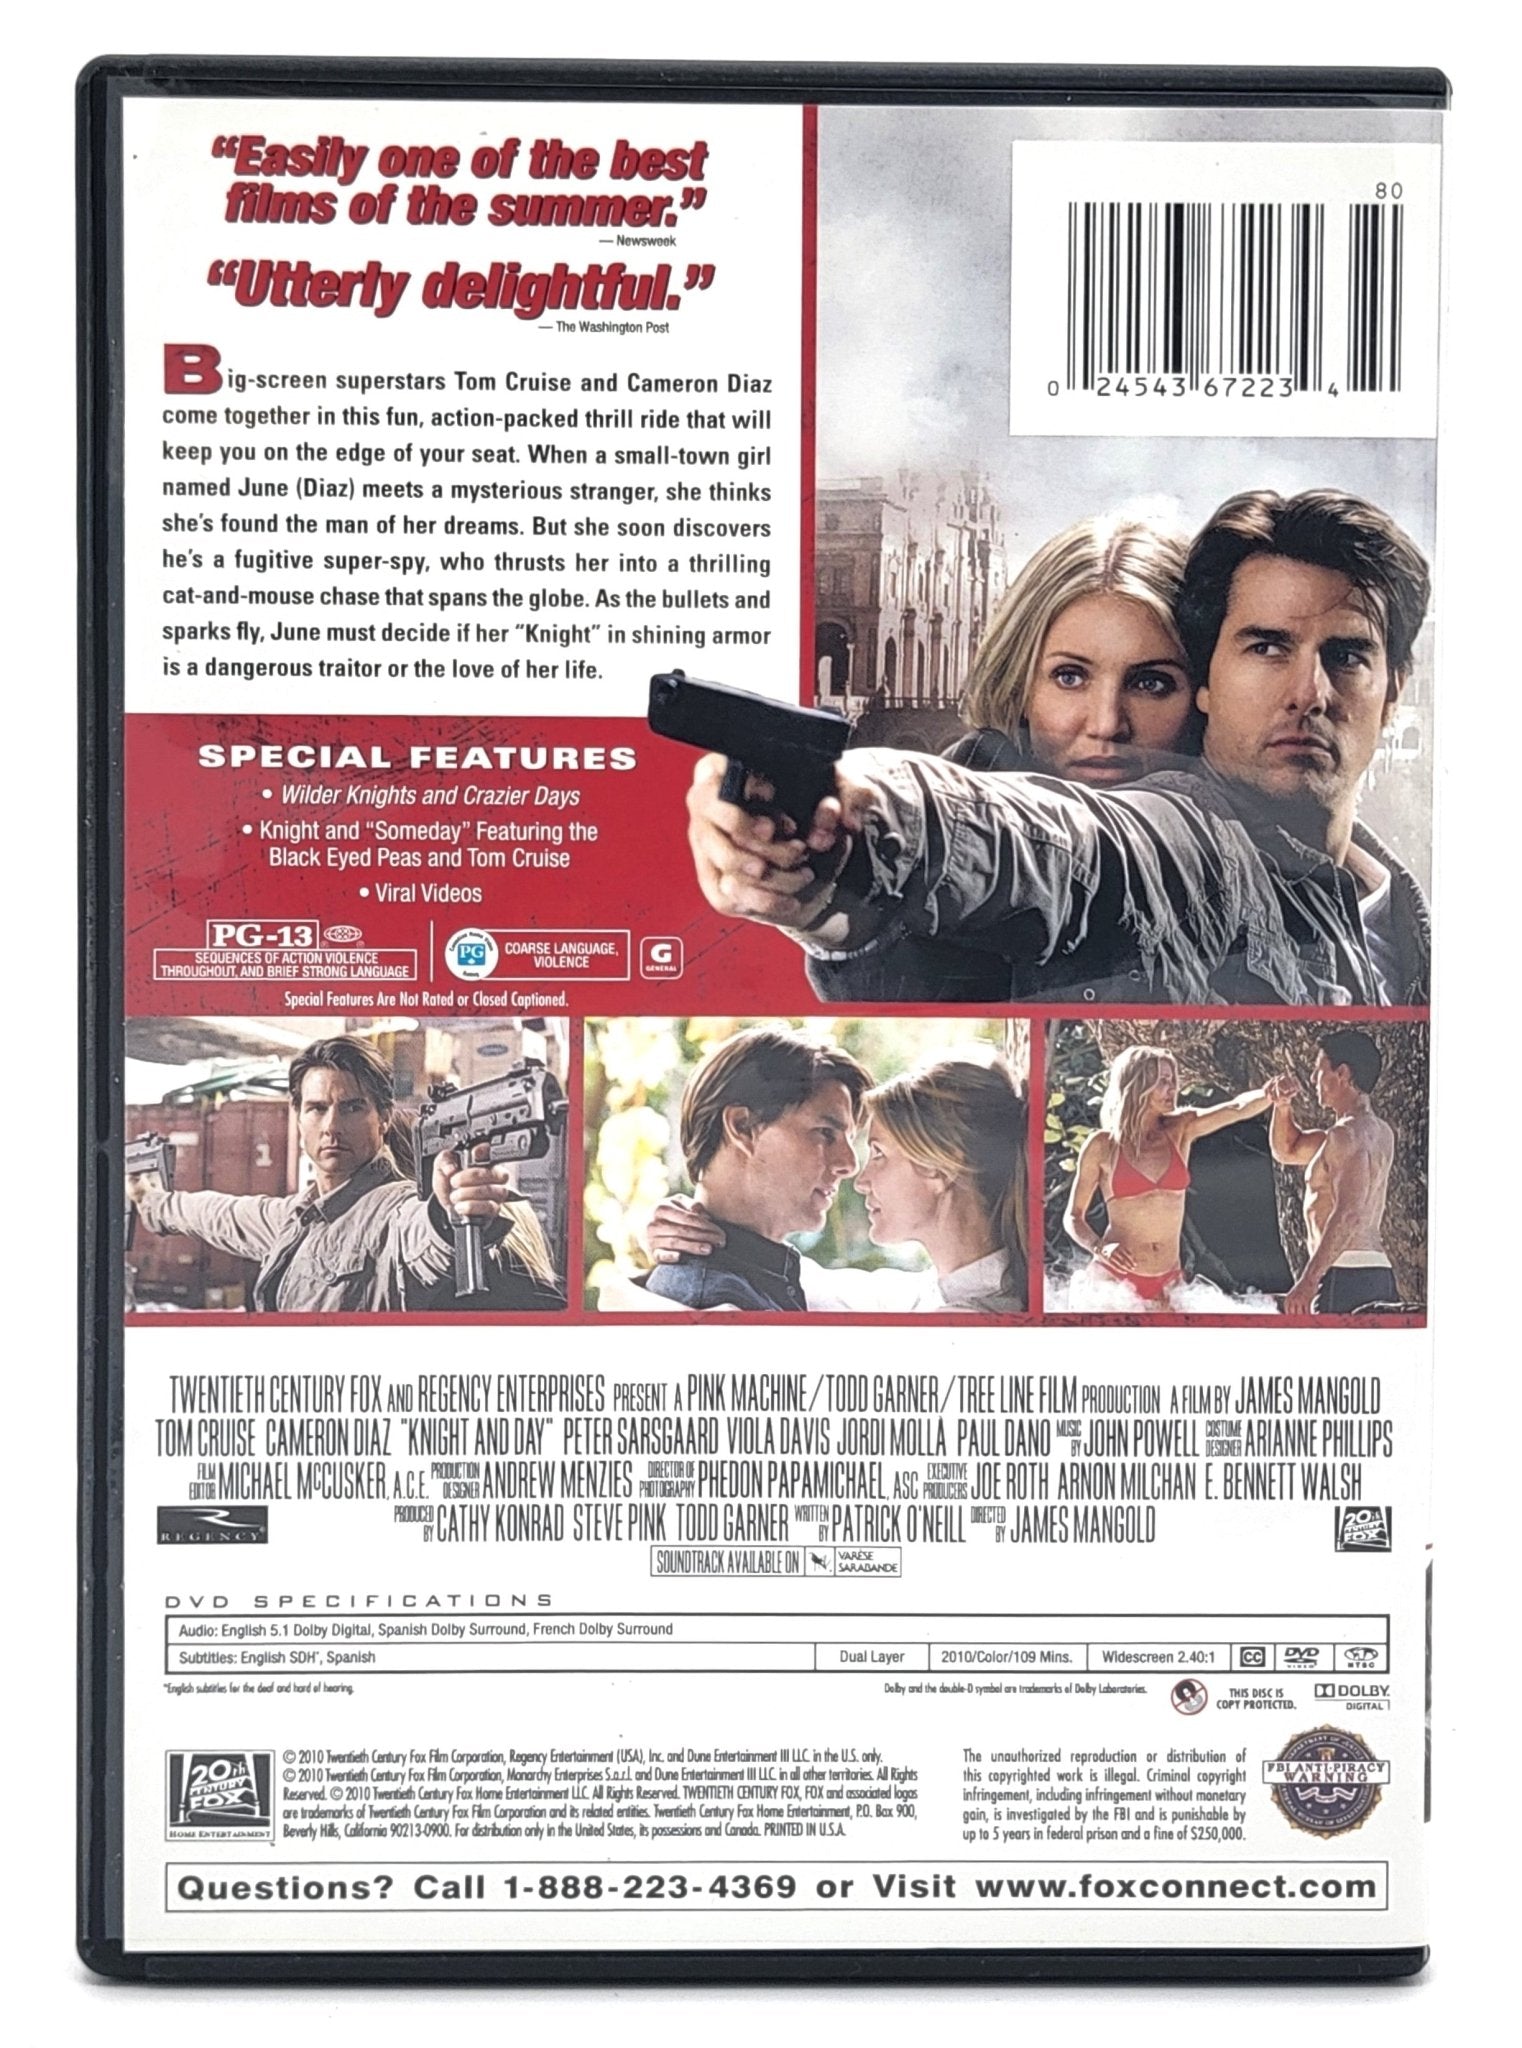 20th Century Fox Home Entertainment - Knight & Day | DVD | Widescreen - DVD - Steady Bunny Shop